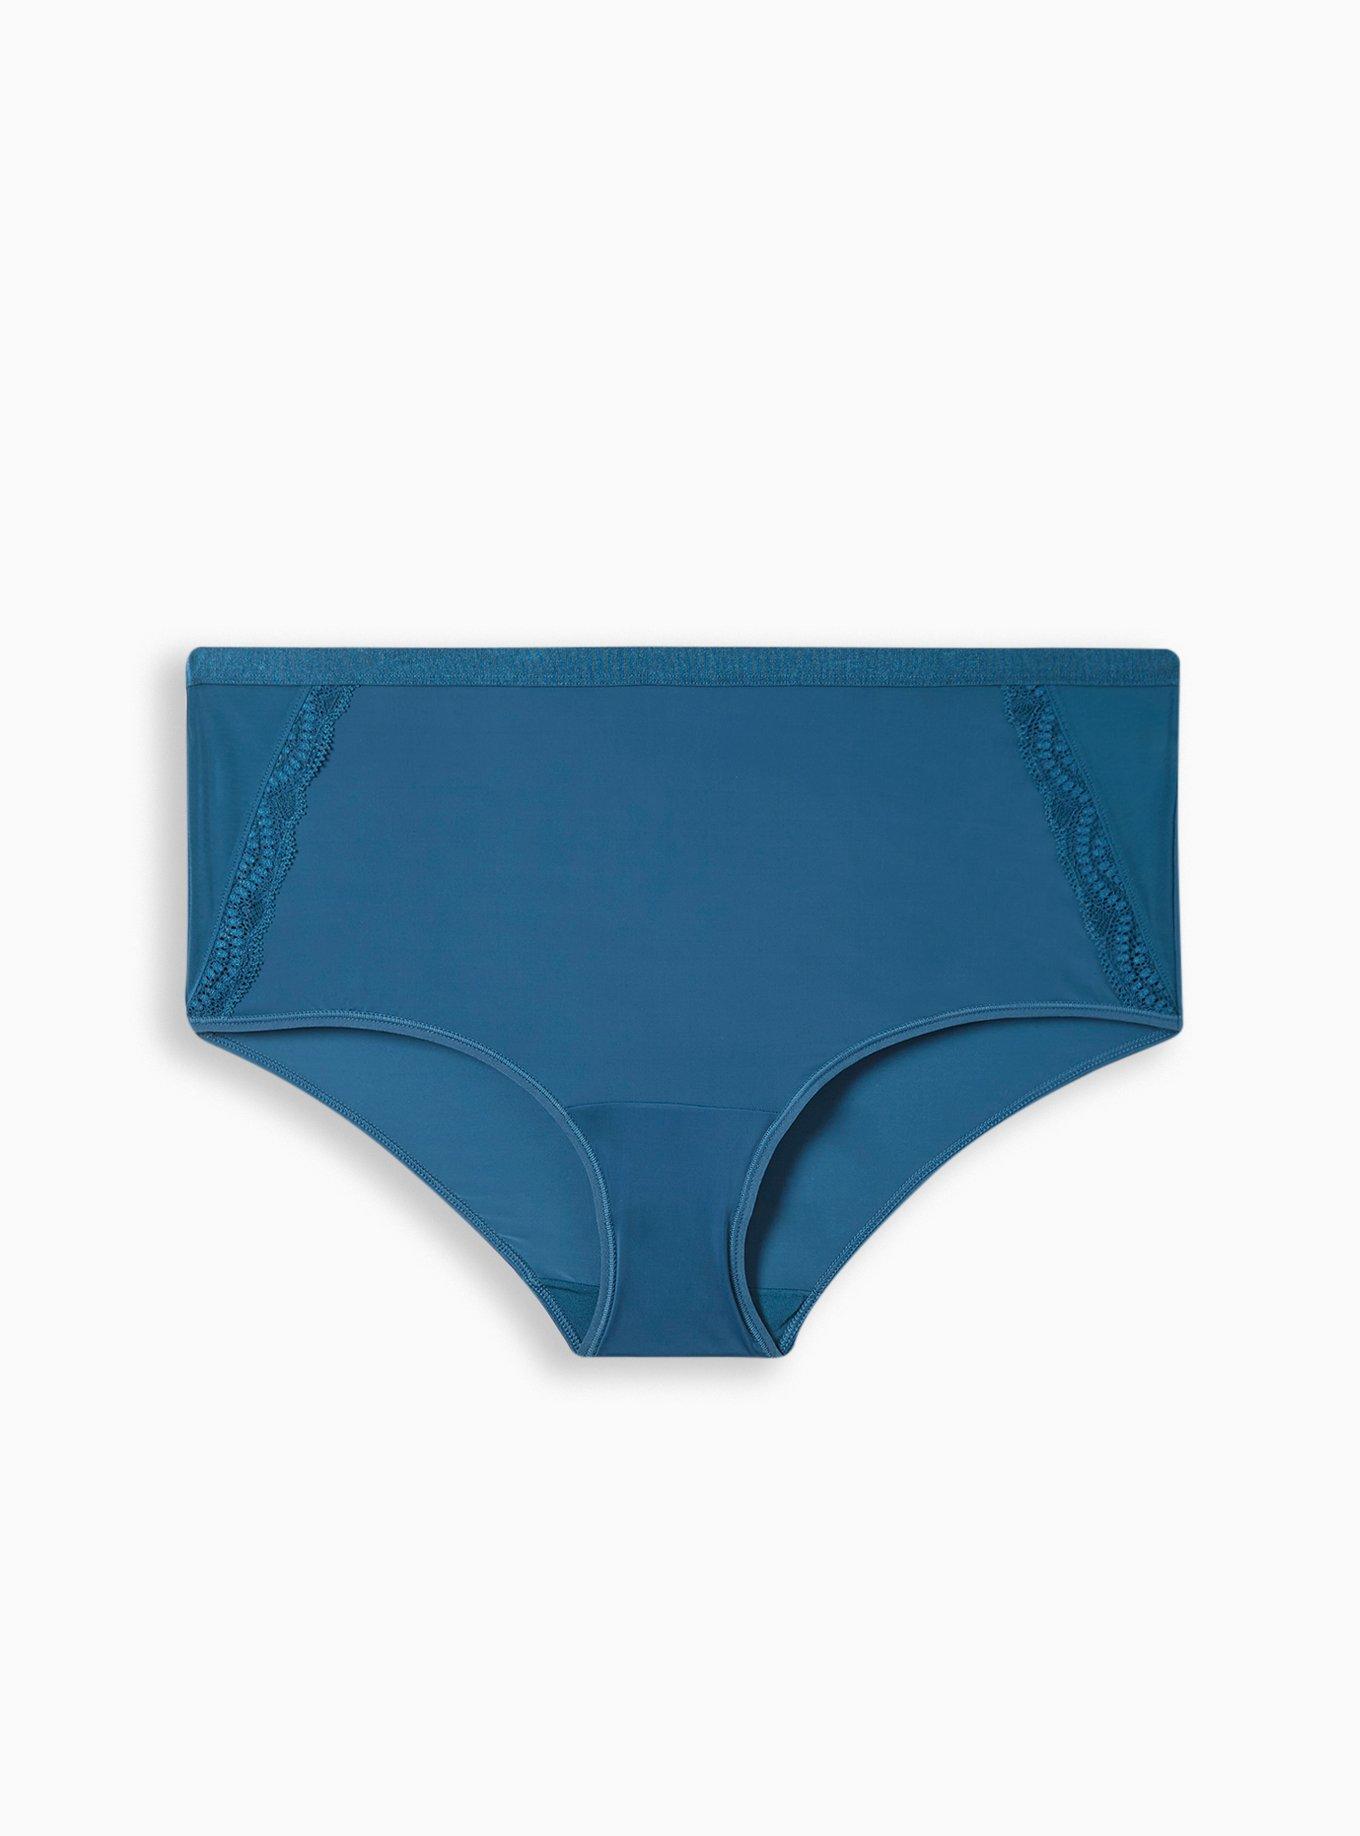 2-PACK) Women's Torrid Panties Underwear NWT Sz. 5 (PICK YOUR STYLE)